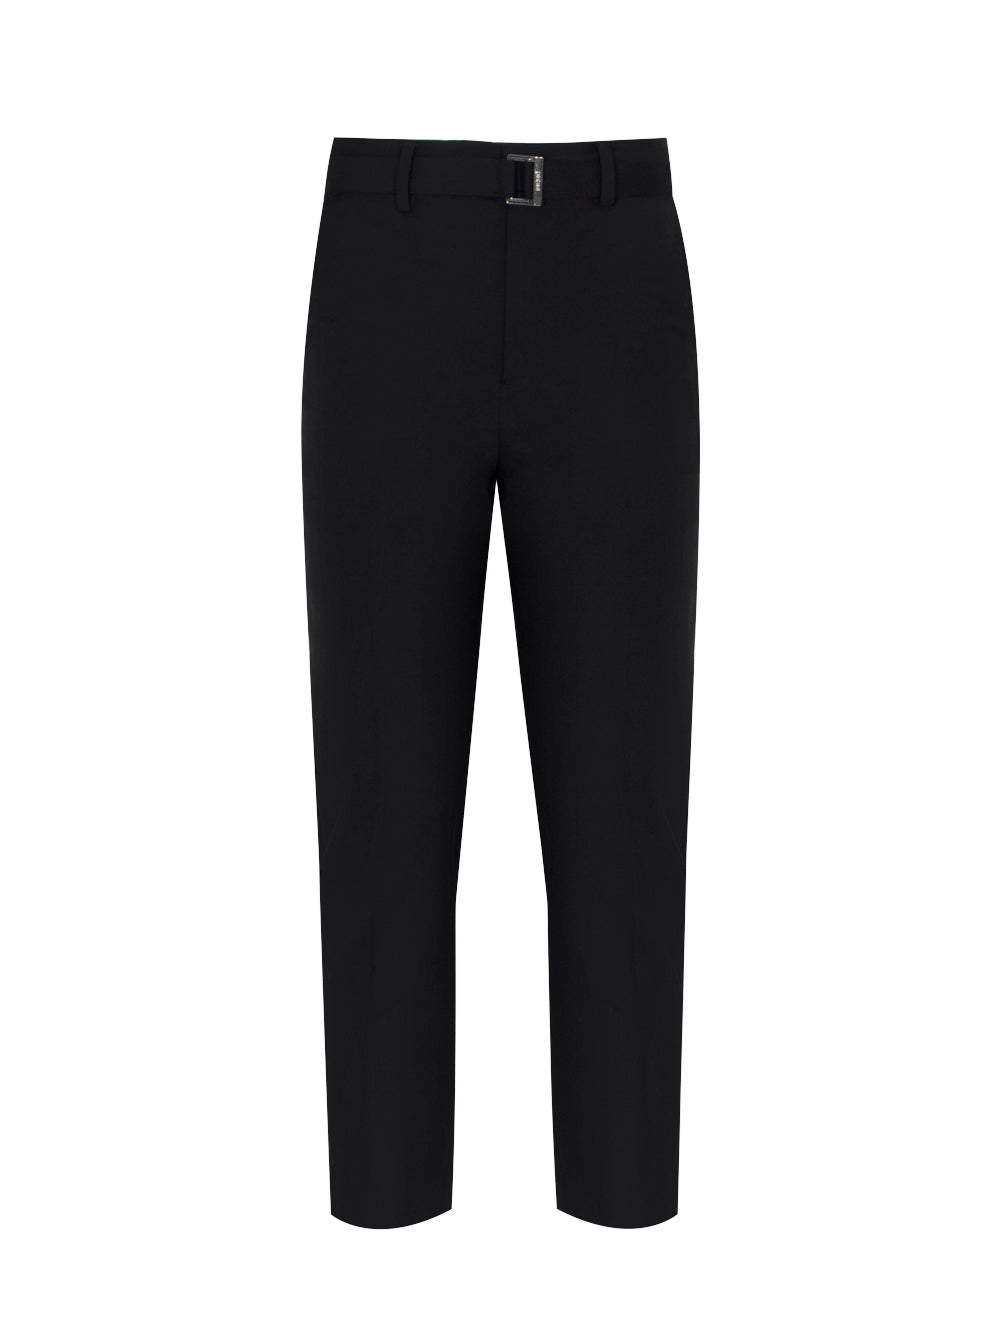 Suiting Pants (Black)